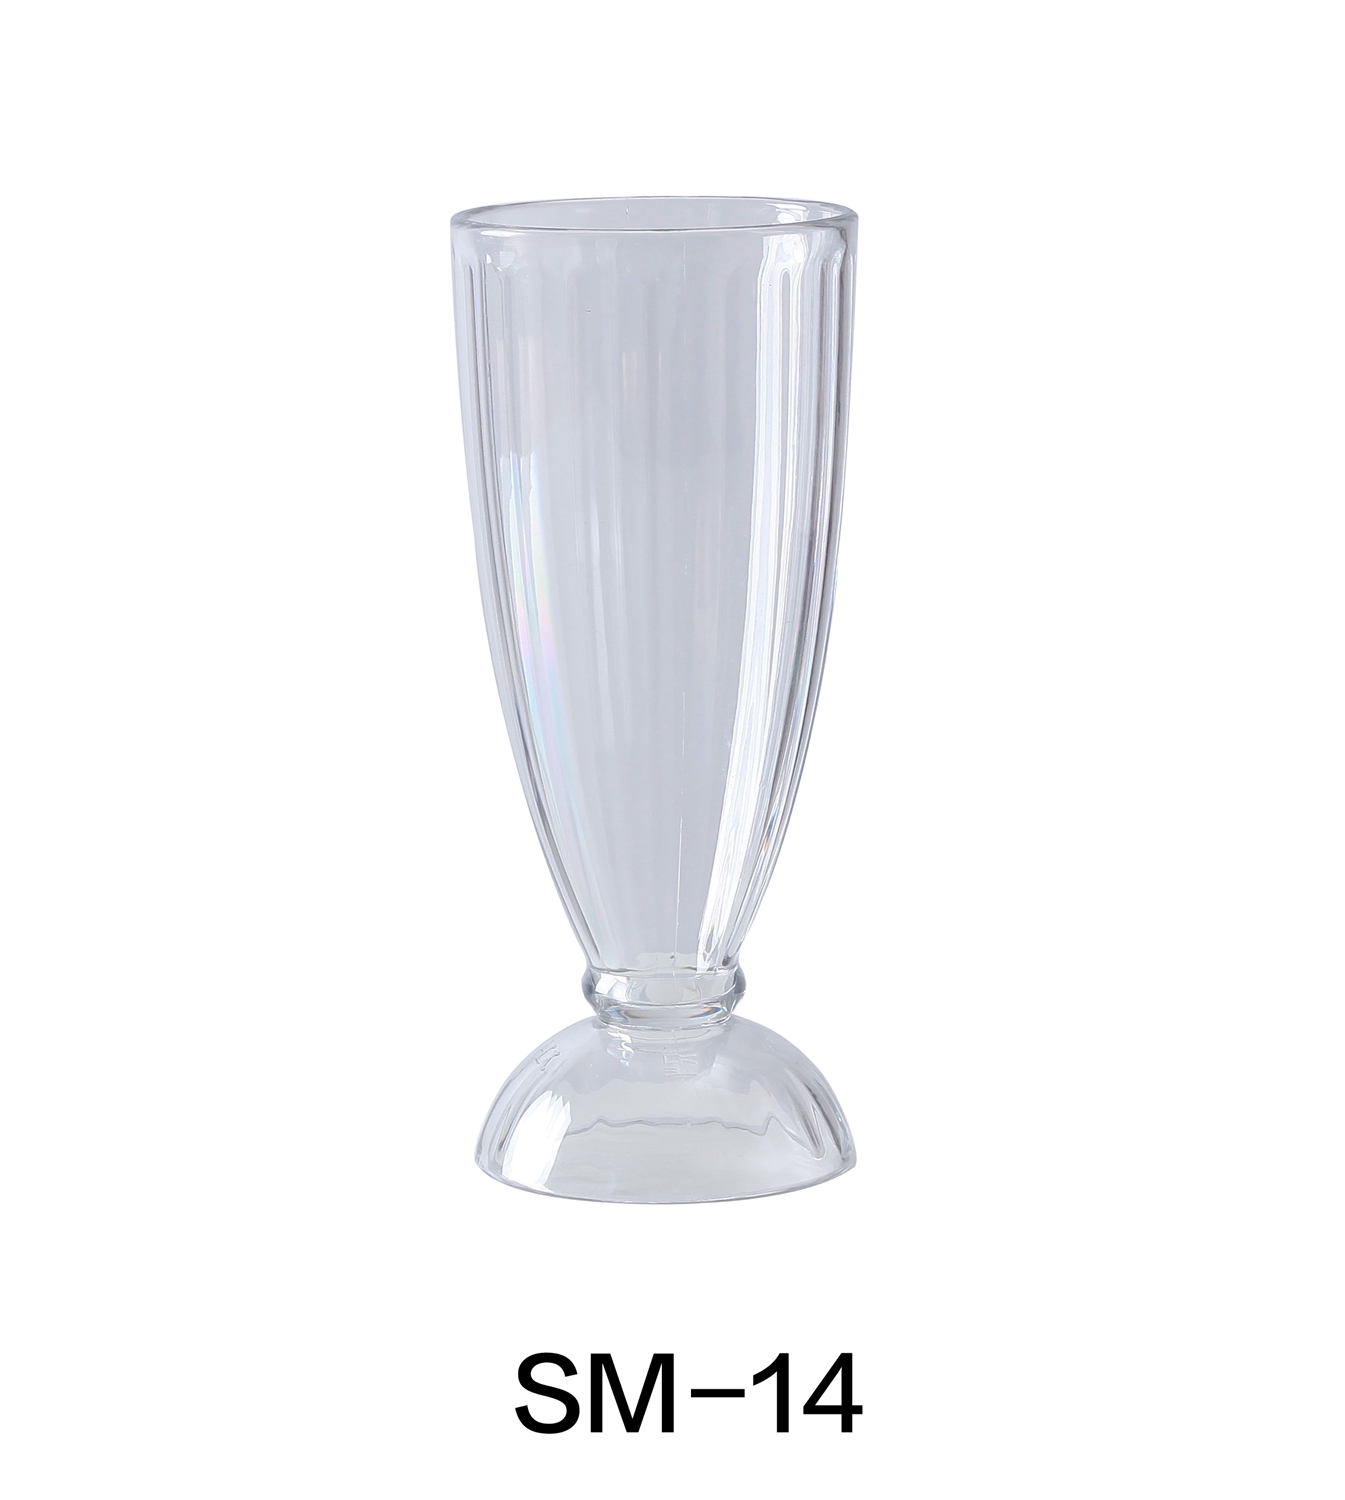 Yanco SM-14 Stemware Beverage Glass, 14 OZ, Plastic, Clear Color - by Celebrate festival Inc